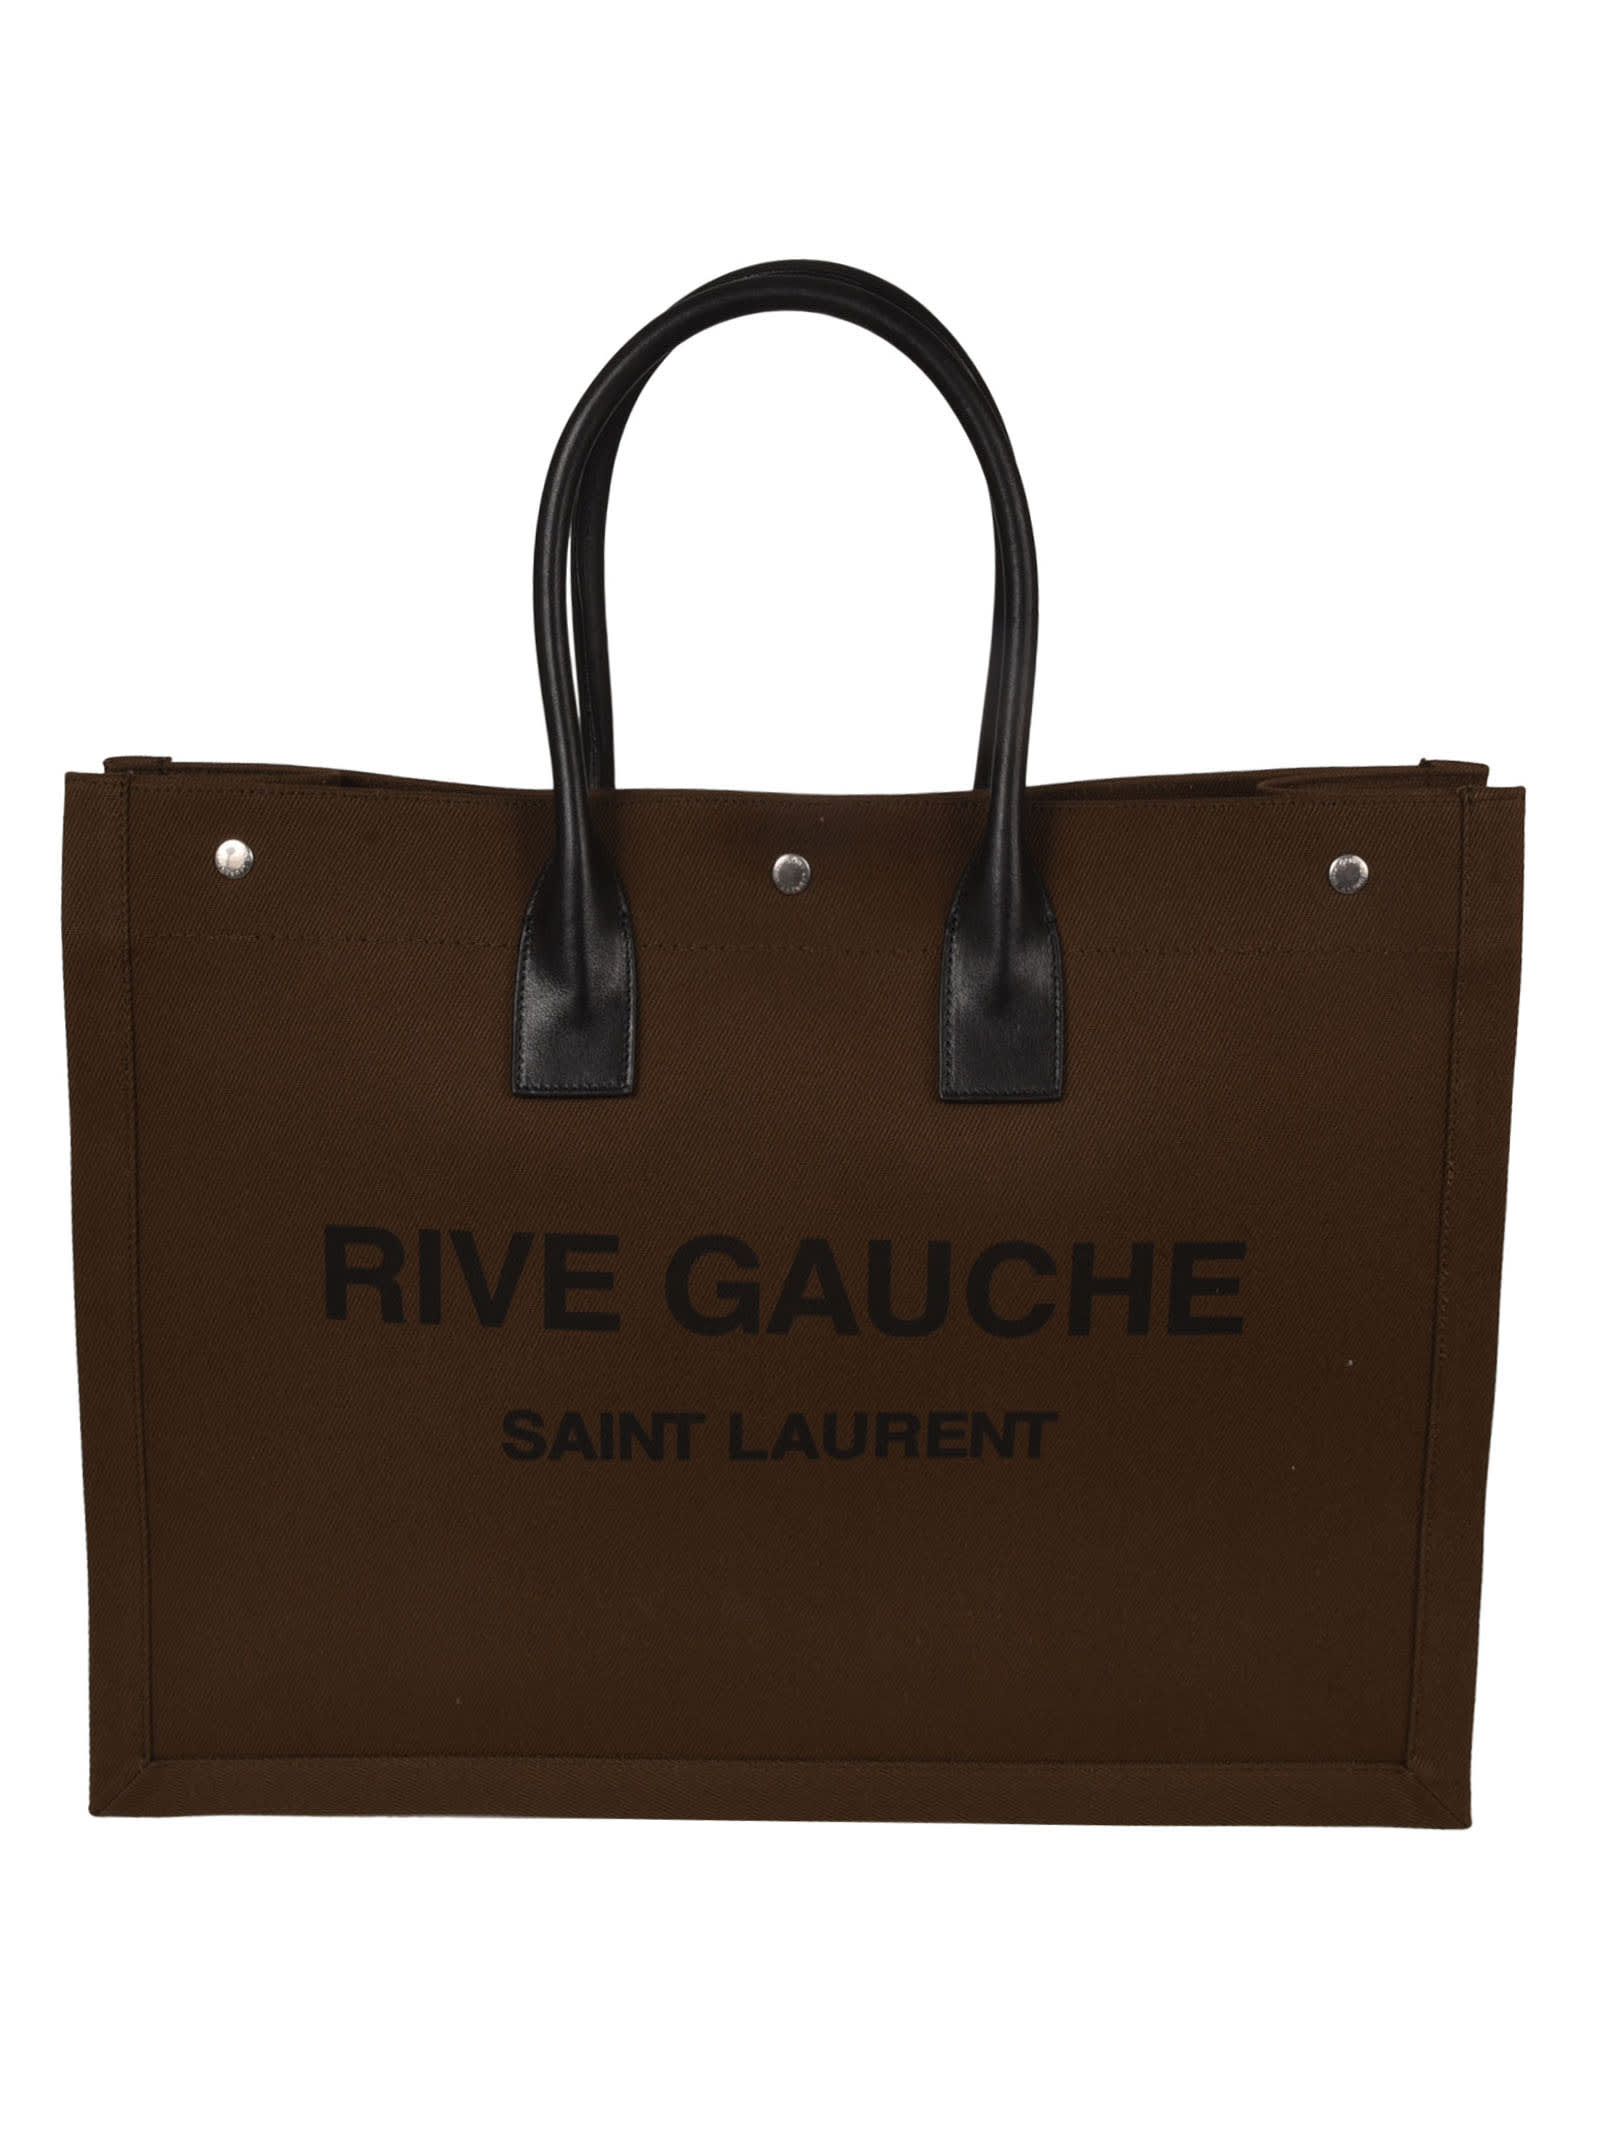 Saint Laurent Rive Gauche Tote In Brown